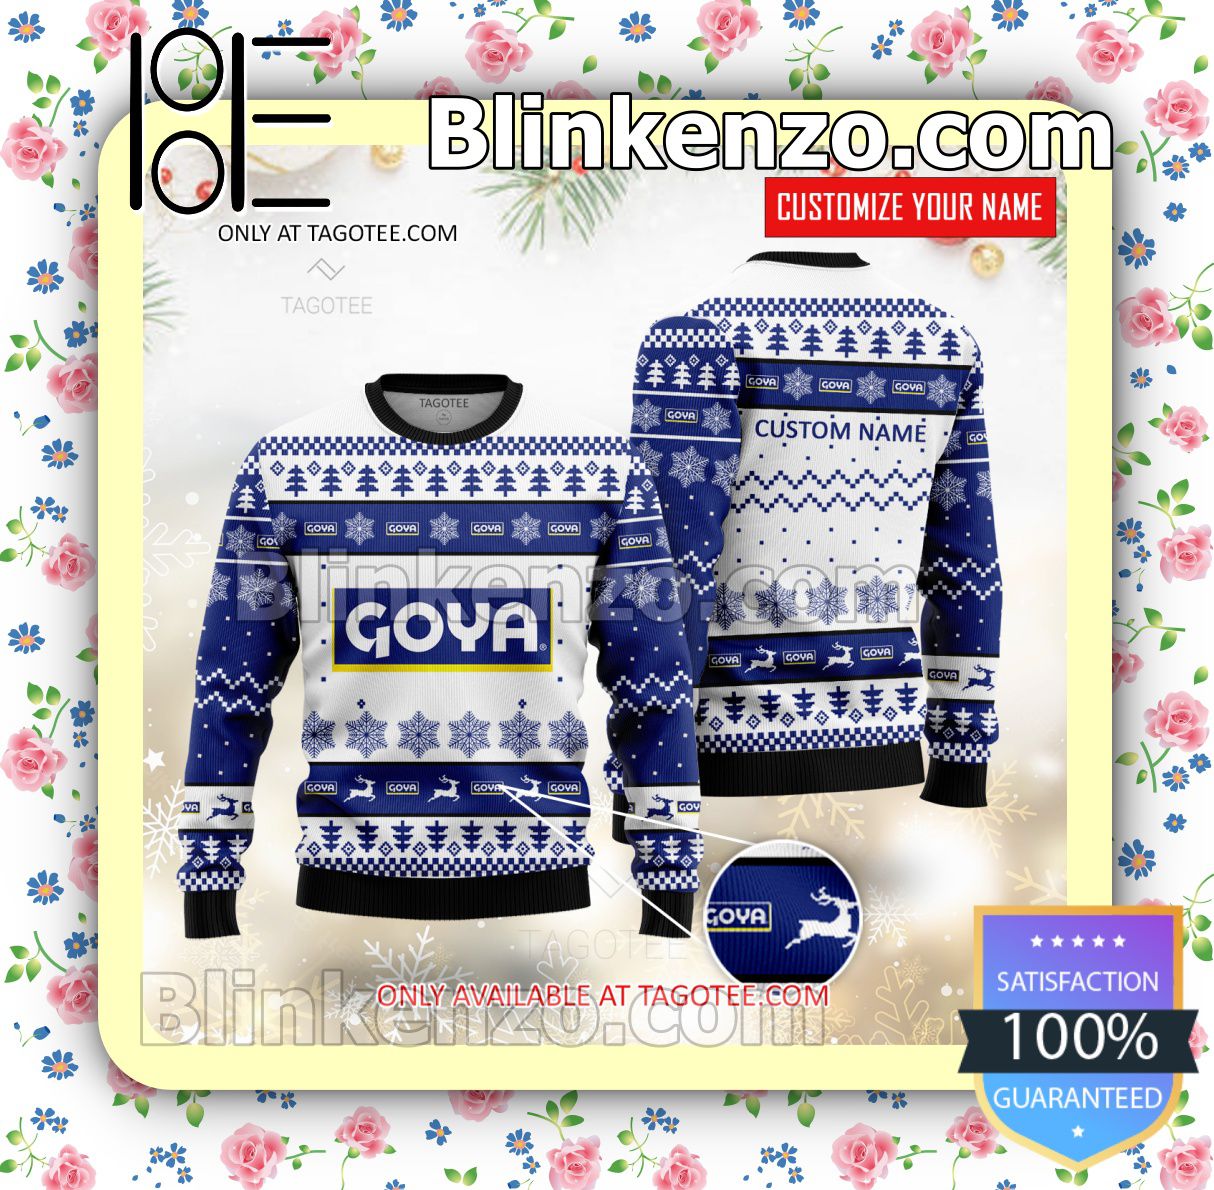 Goya Brand Print Christmas Sweater